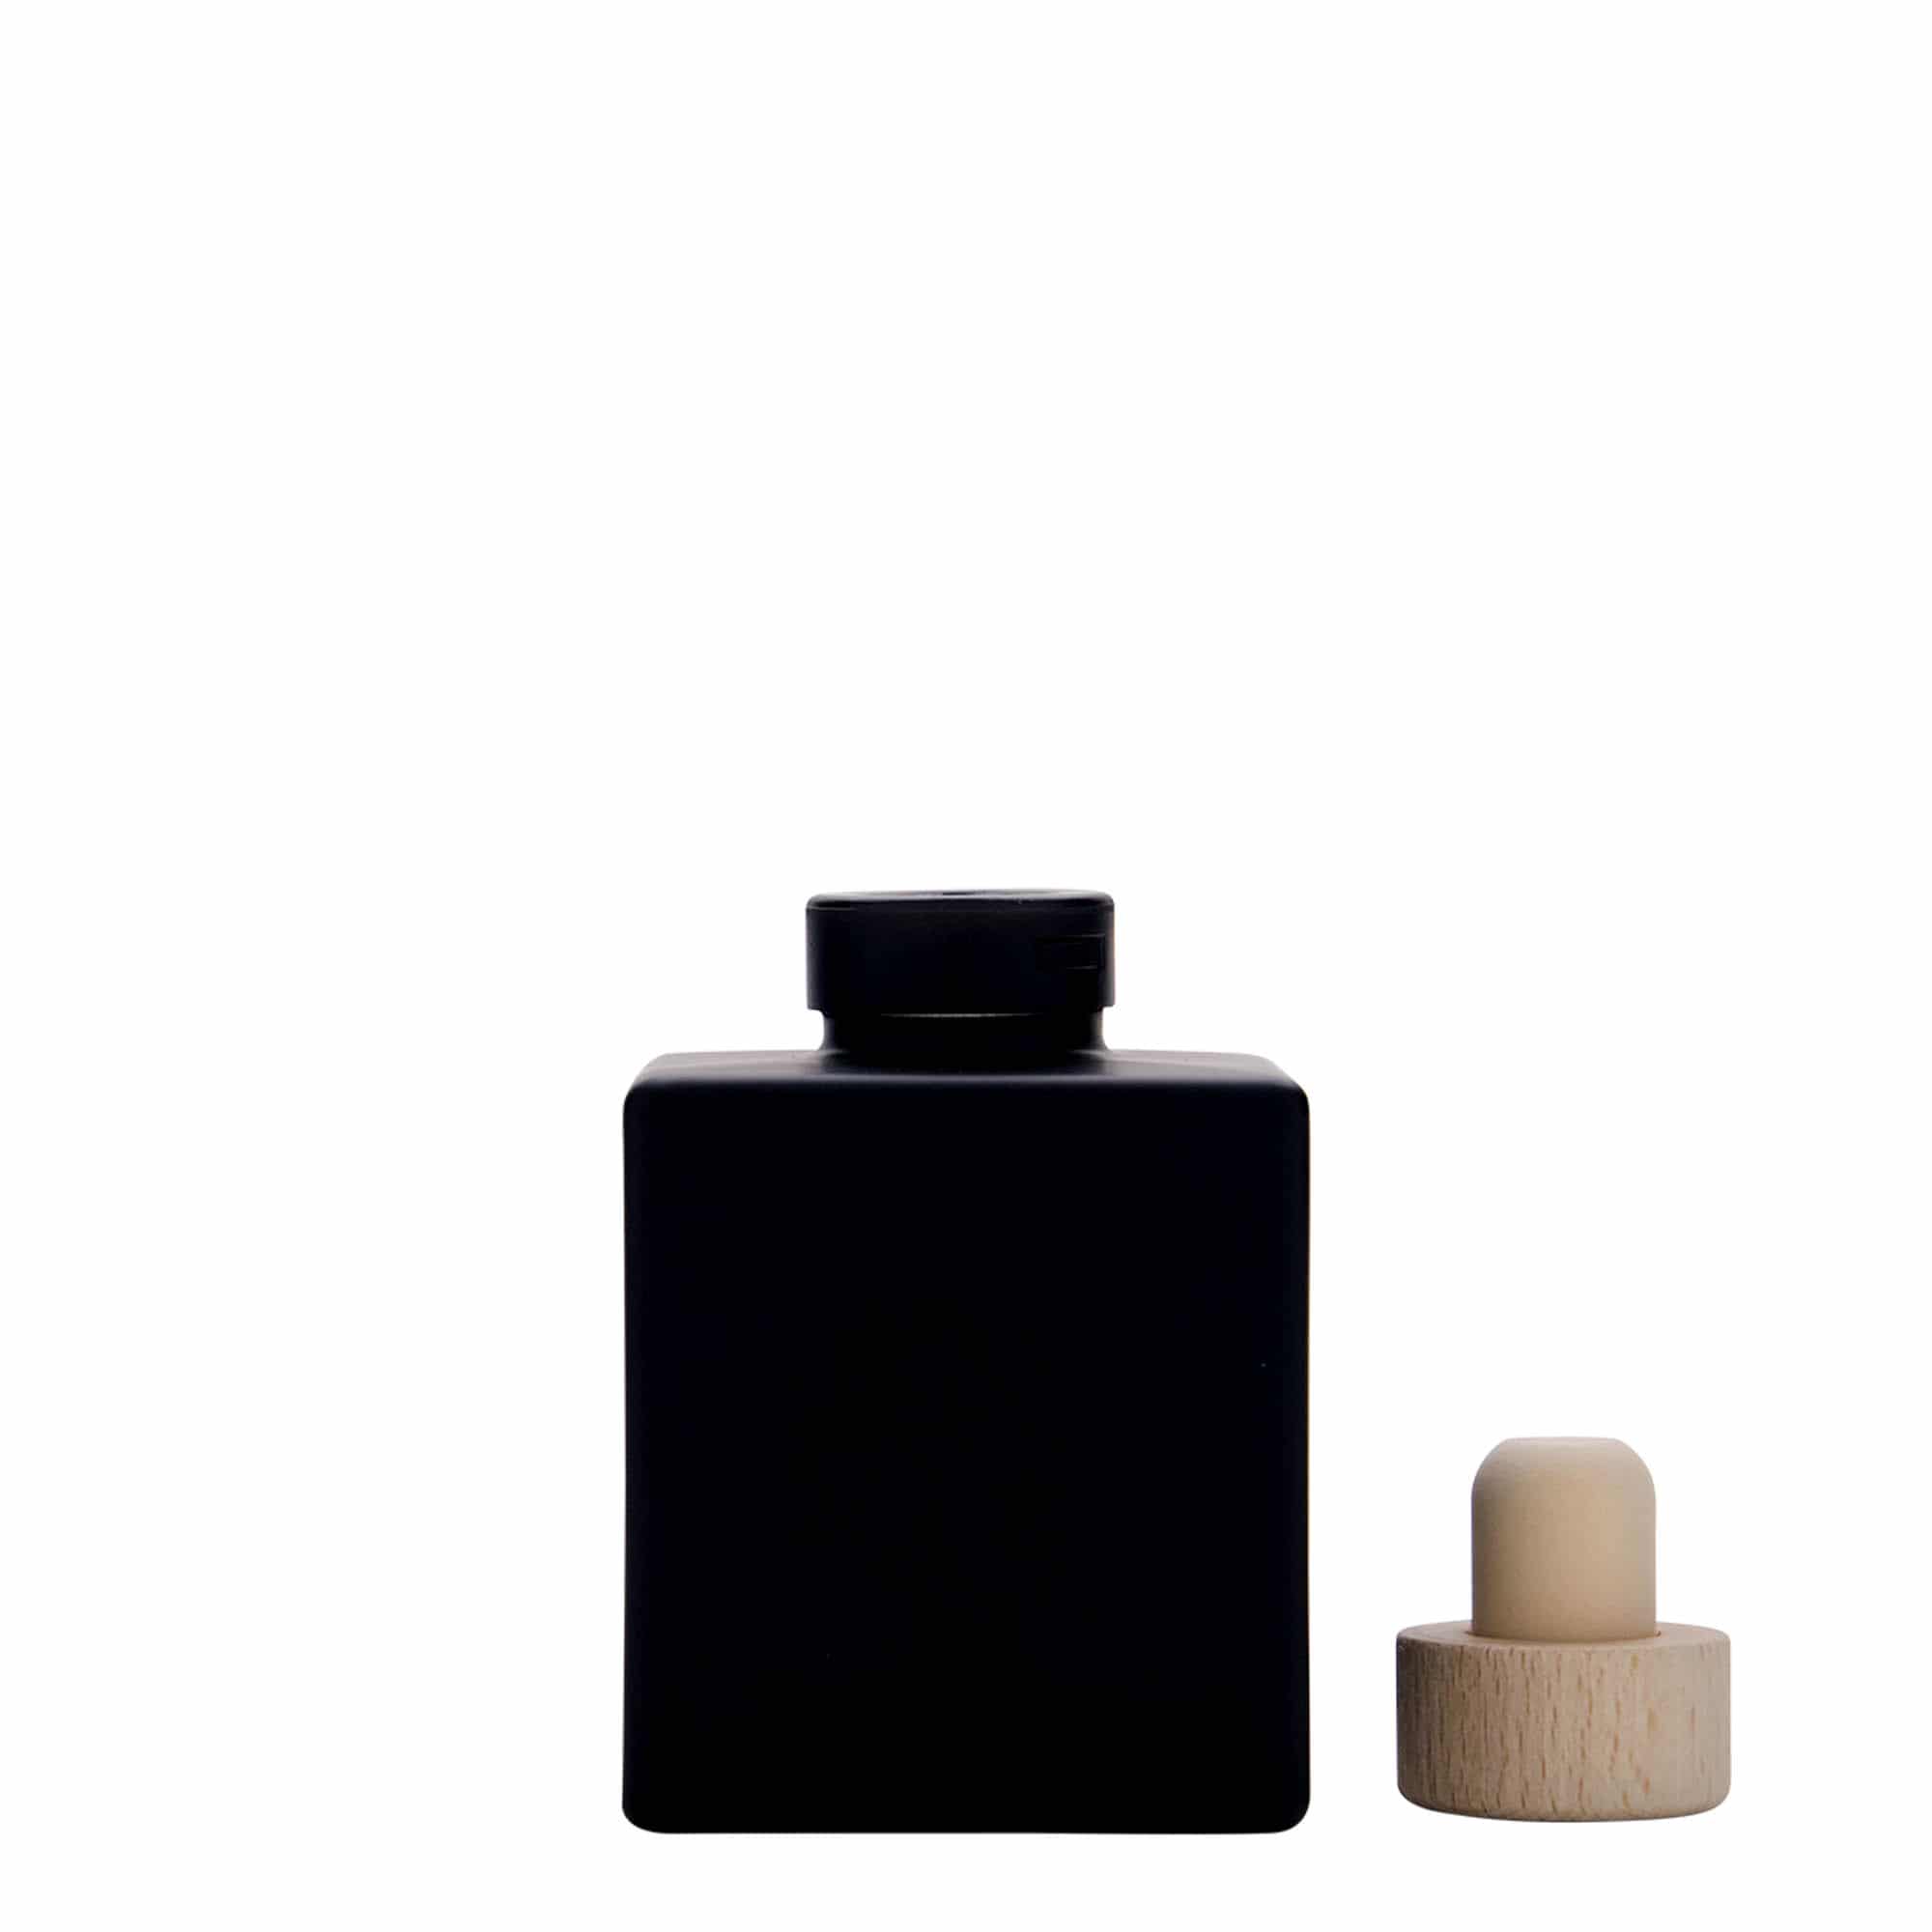 100 ml glass bottle 'Cube', square, black, closure: cork